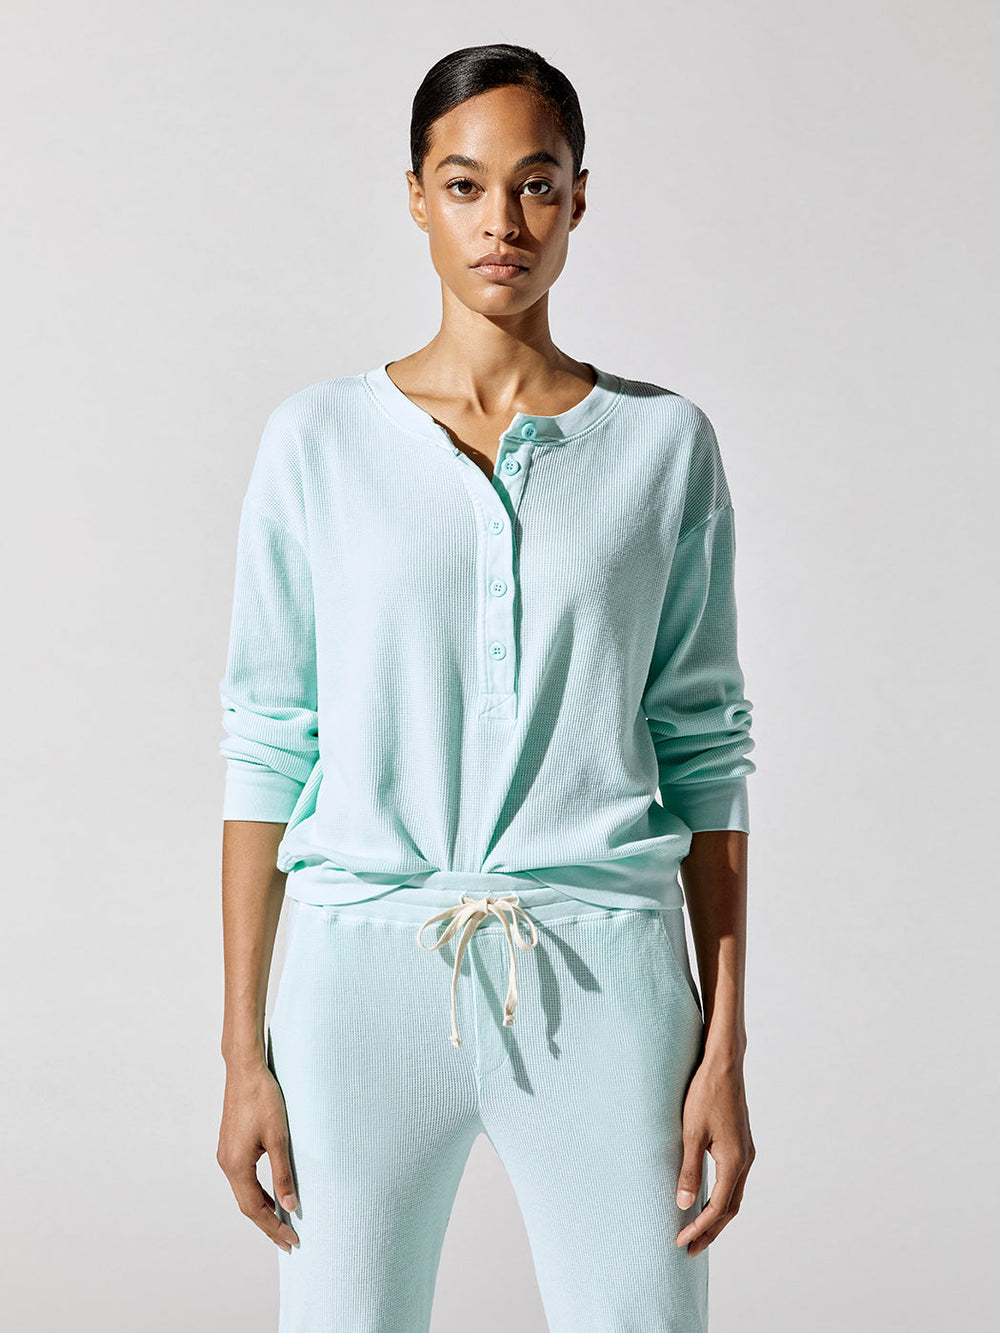 Women's Thermal Pajama 2 Piece Set - Luxury Wear - Sundry